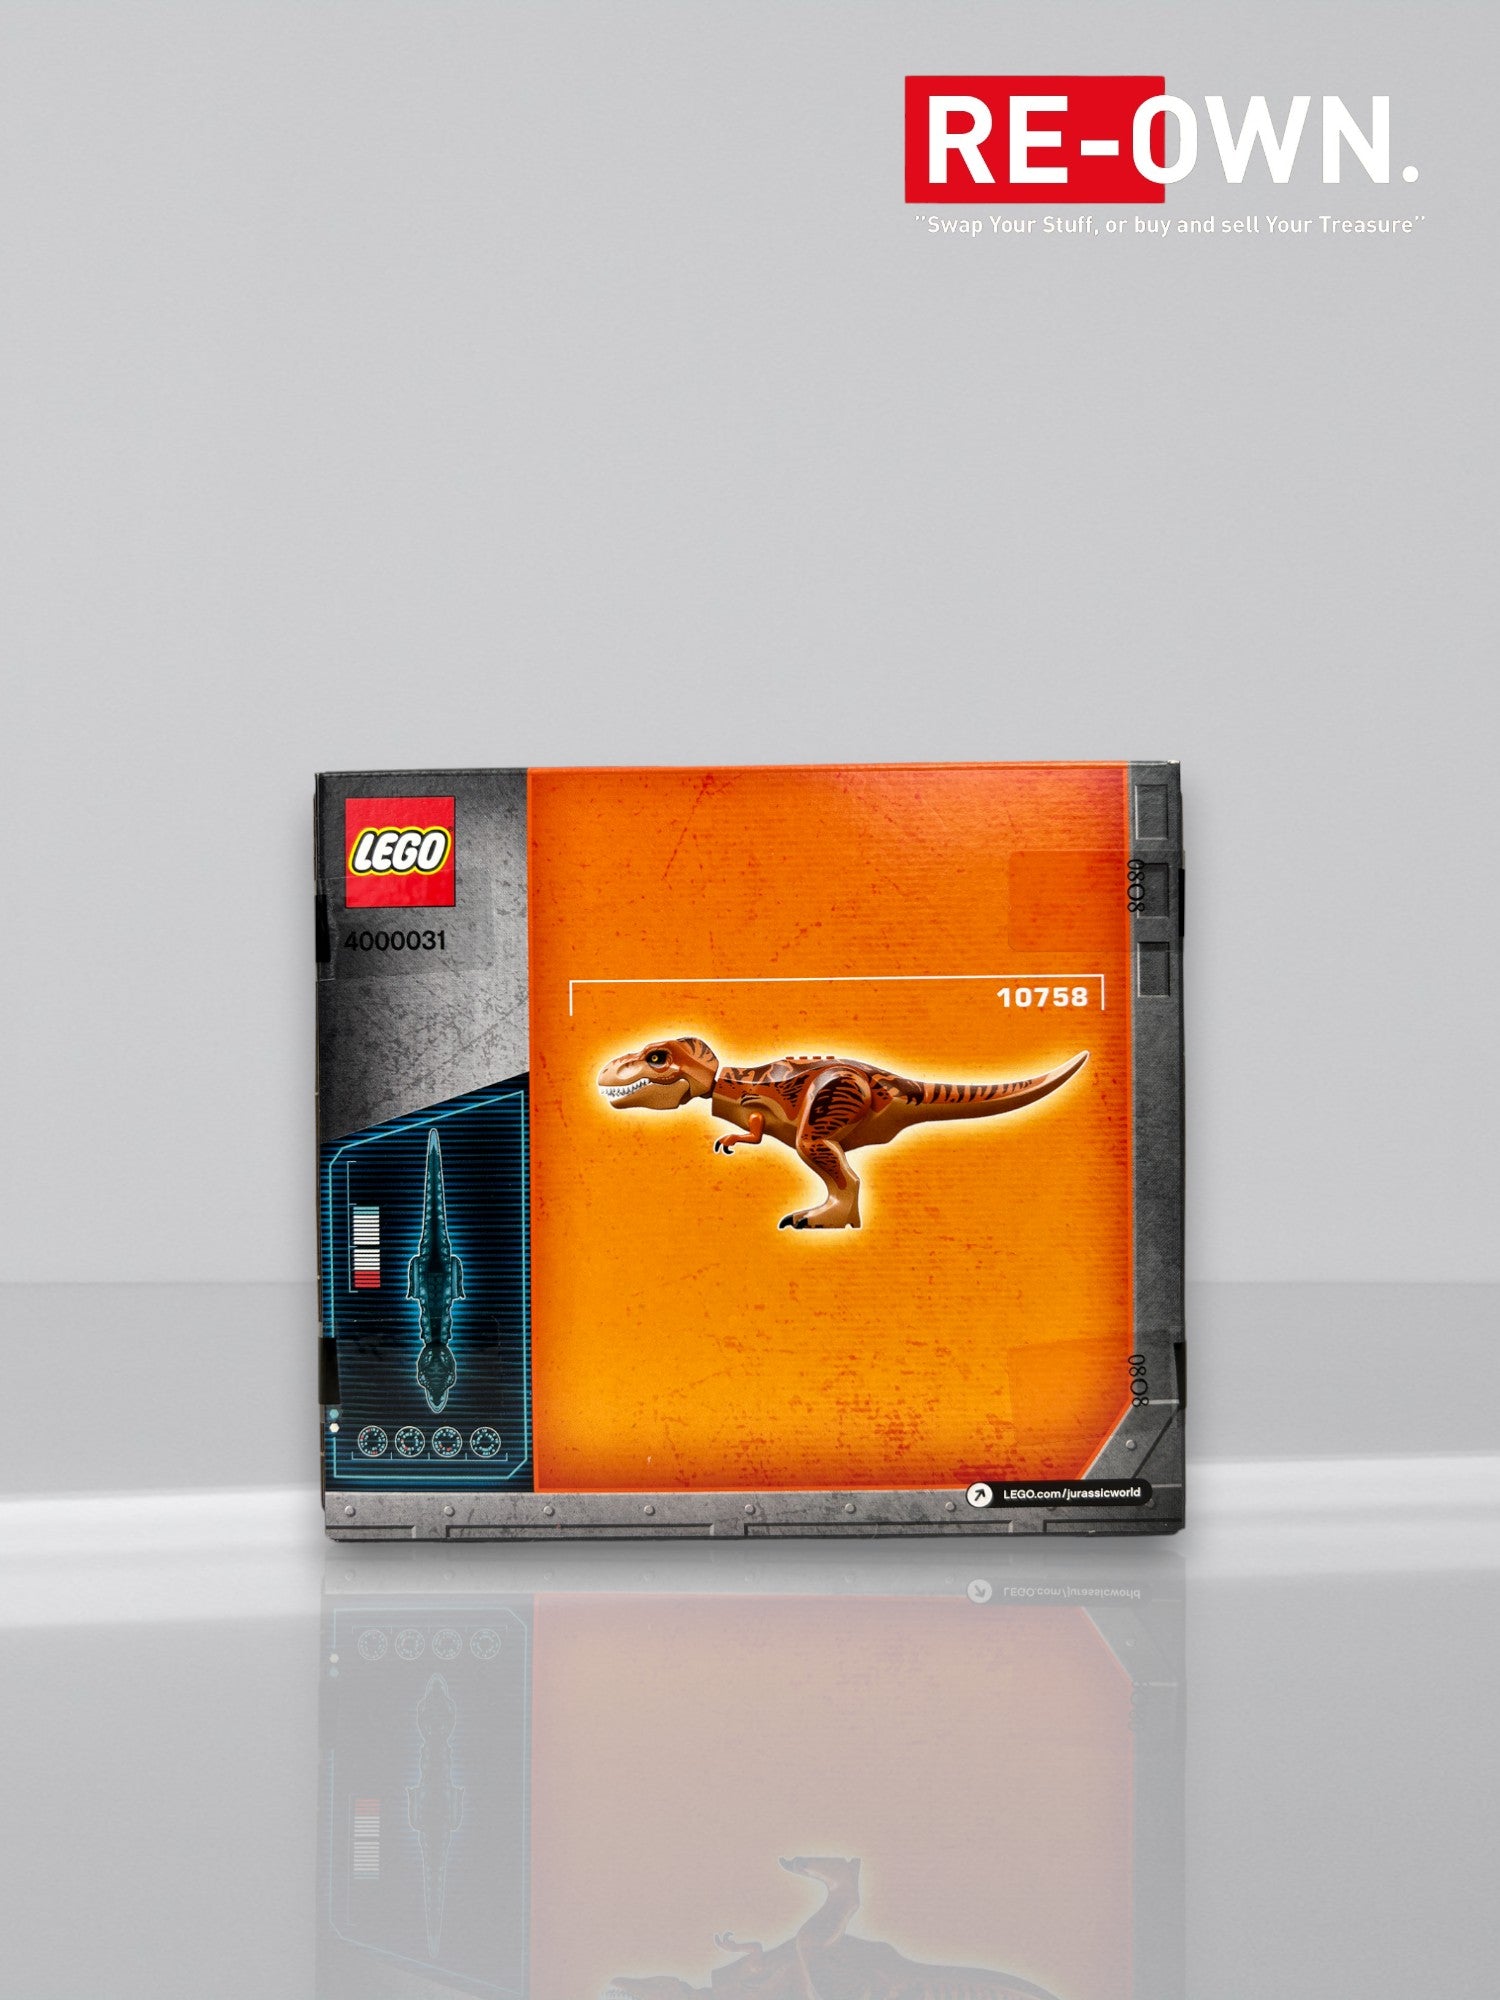 LEGO 4000031 Jurassic World Fallen Kingdom Exclusive T-Rex